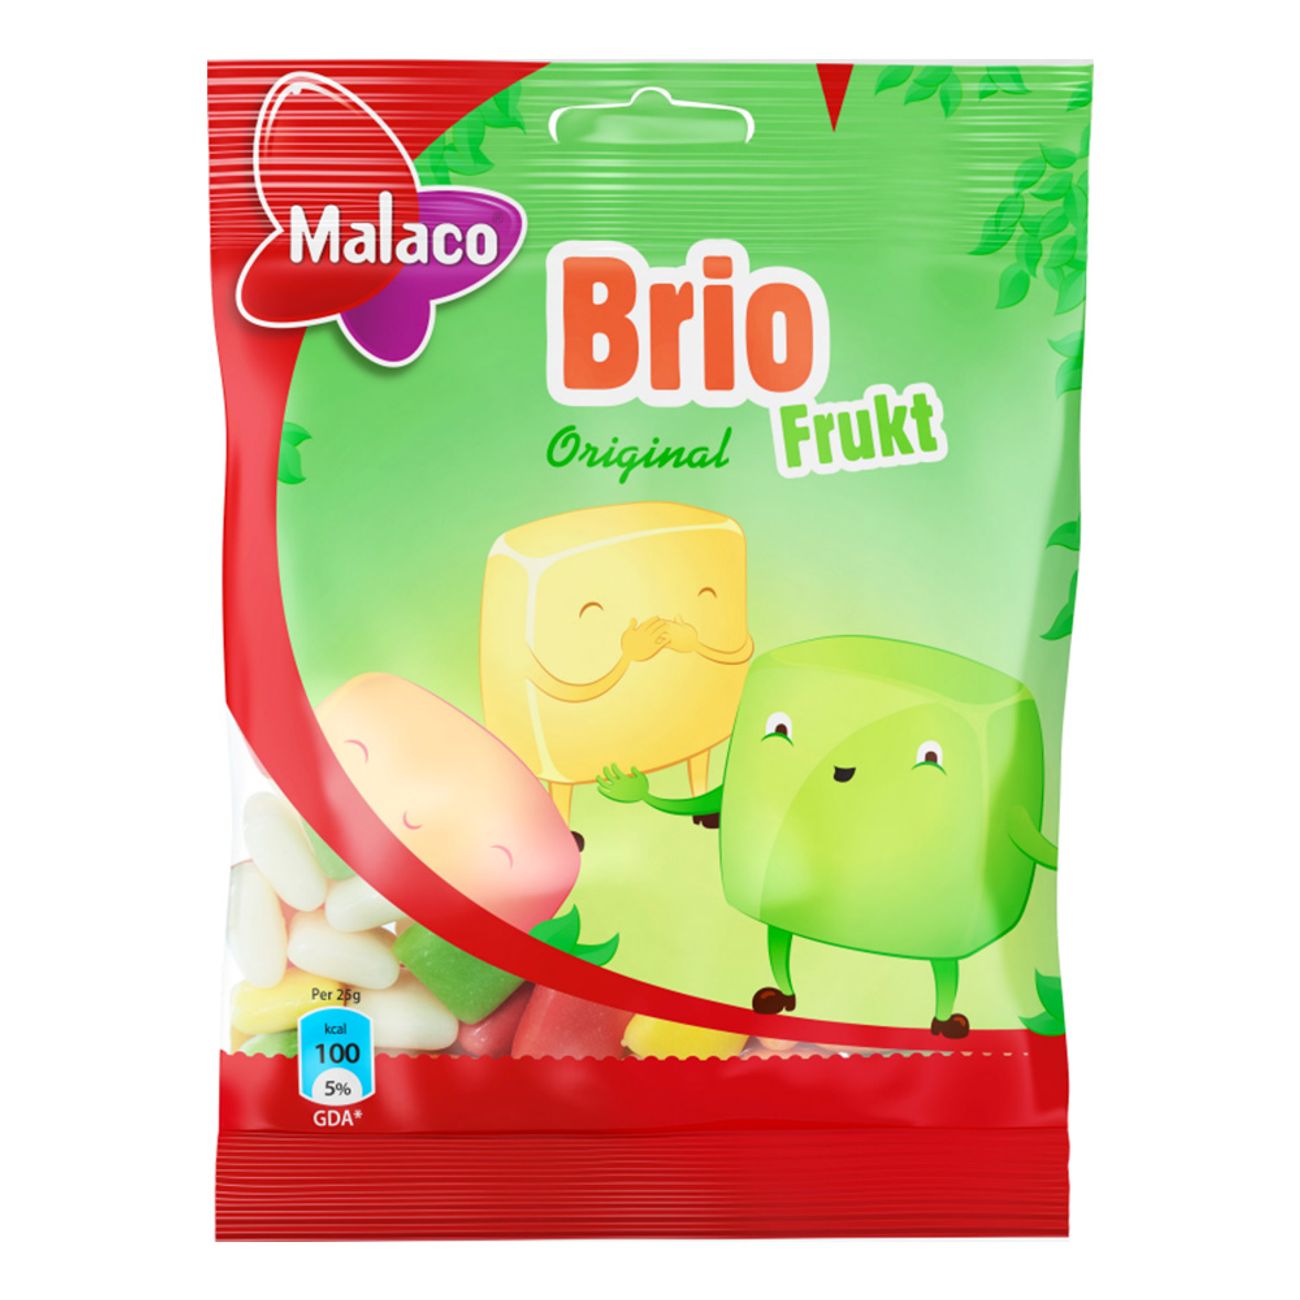 brio-original-frukt-1